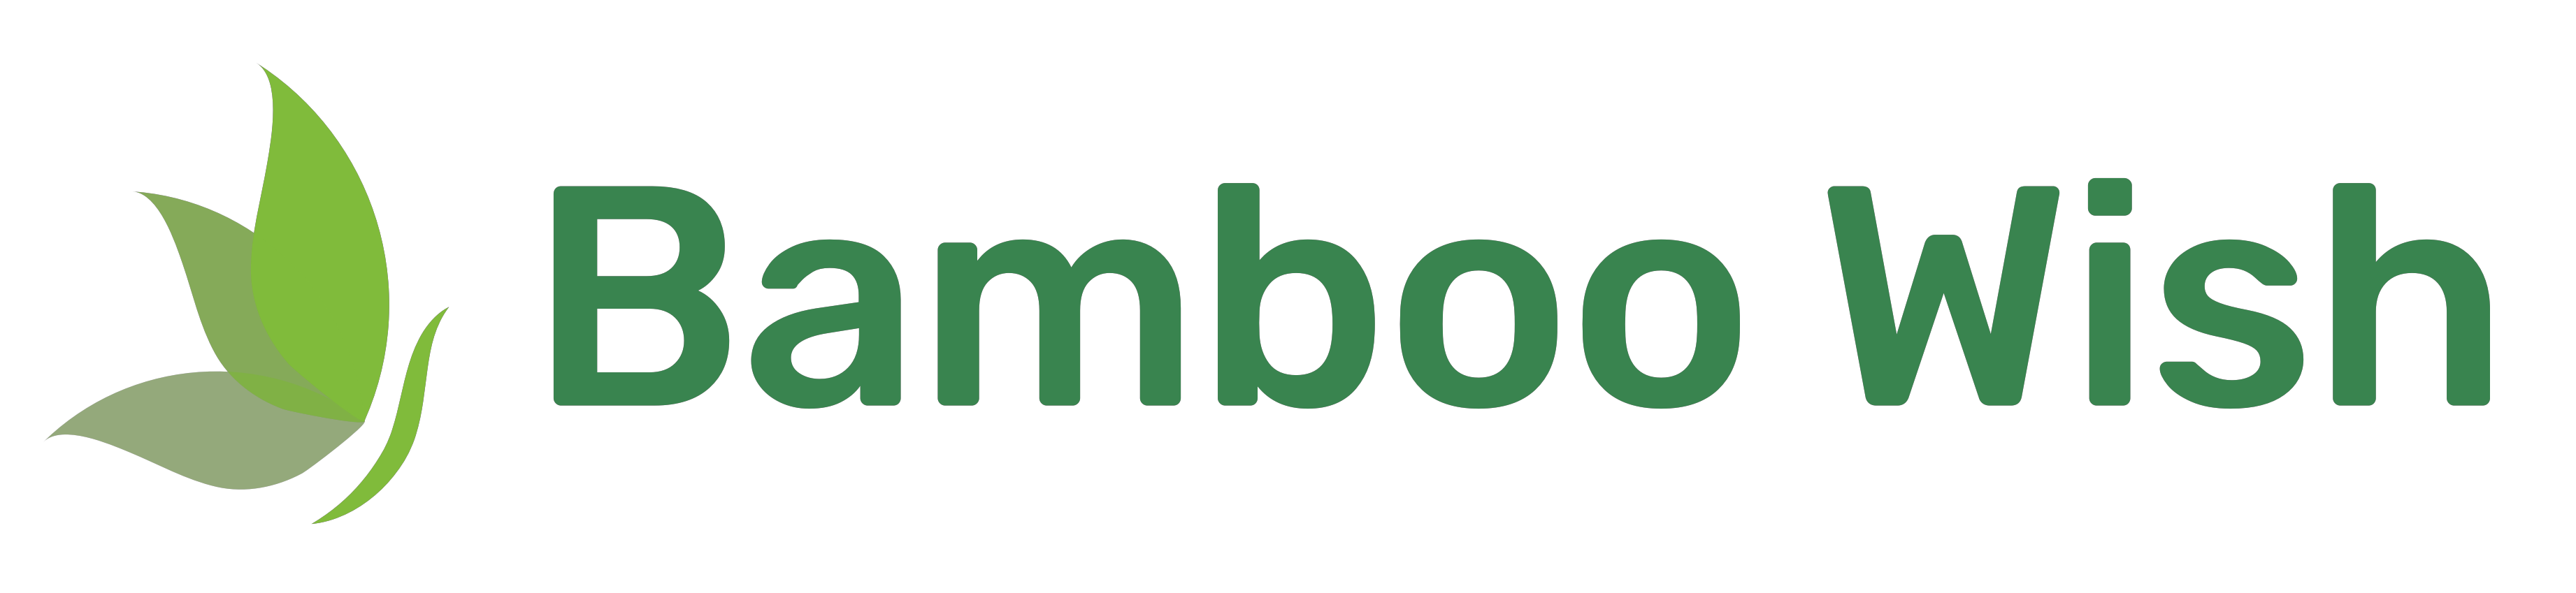 Bamboo Wish Logo